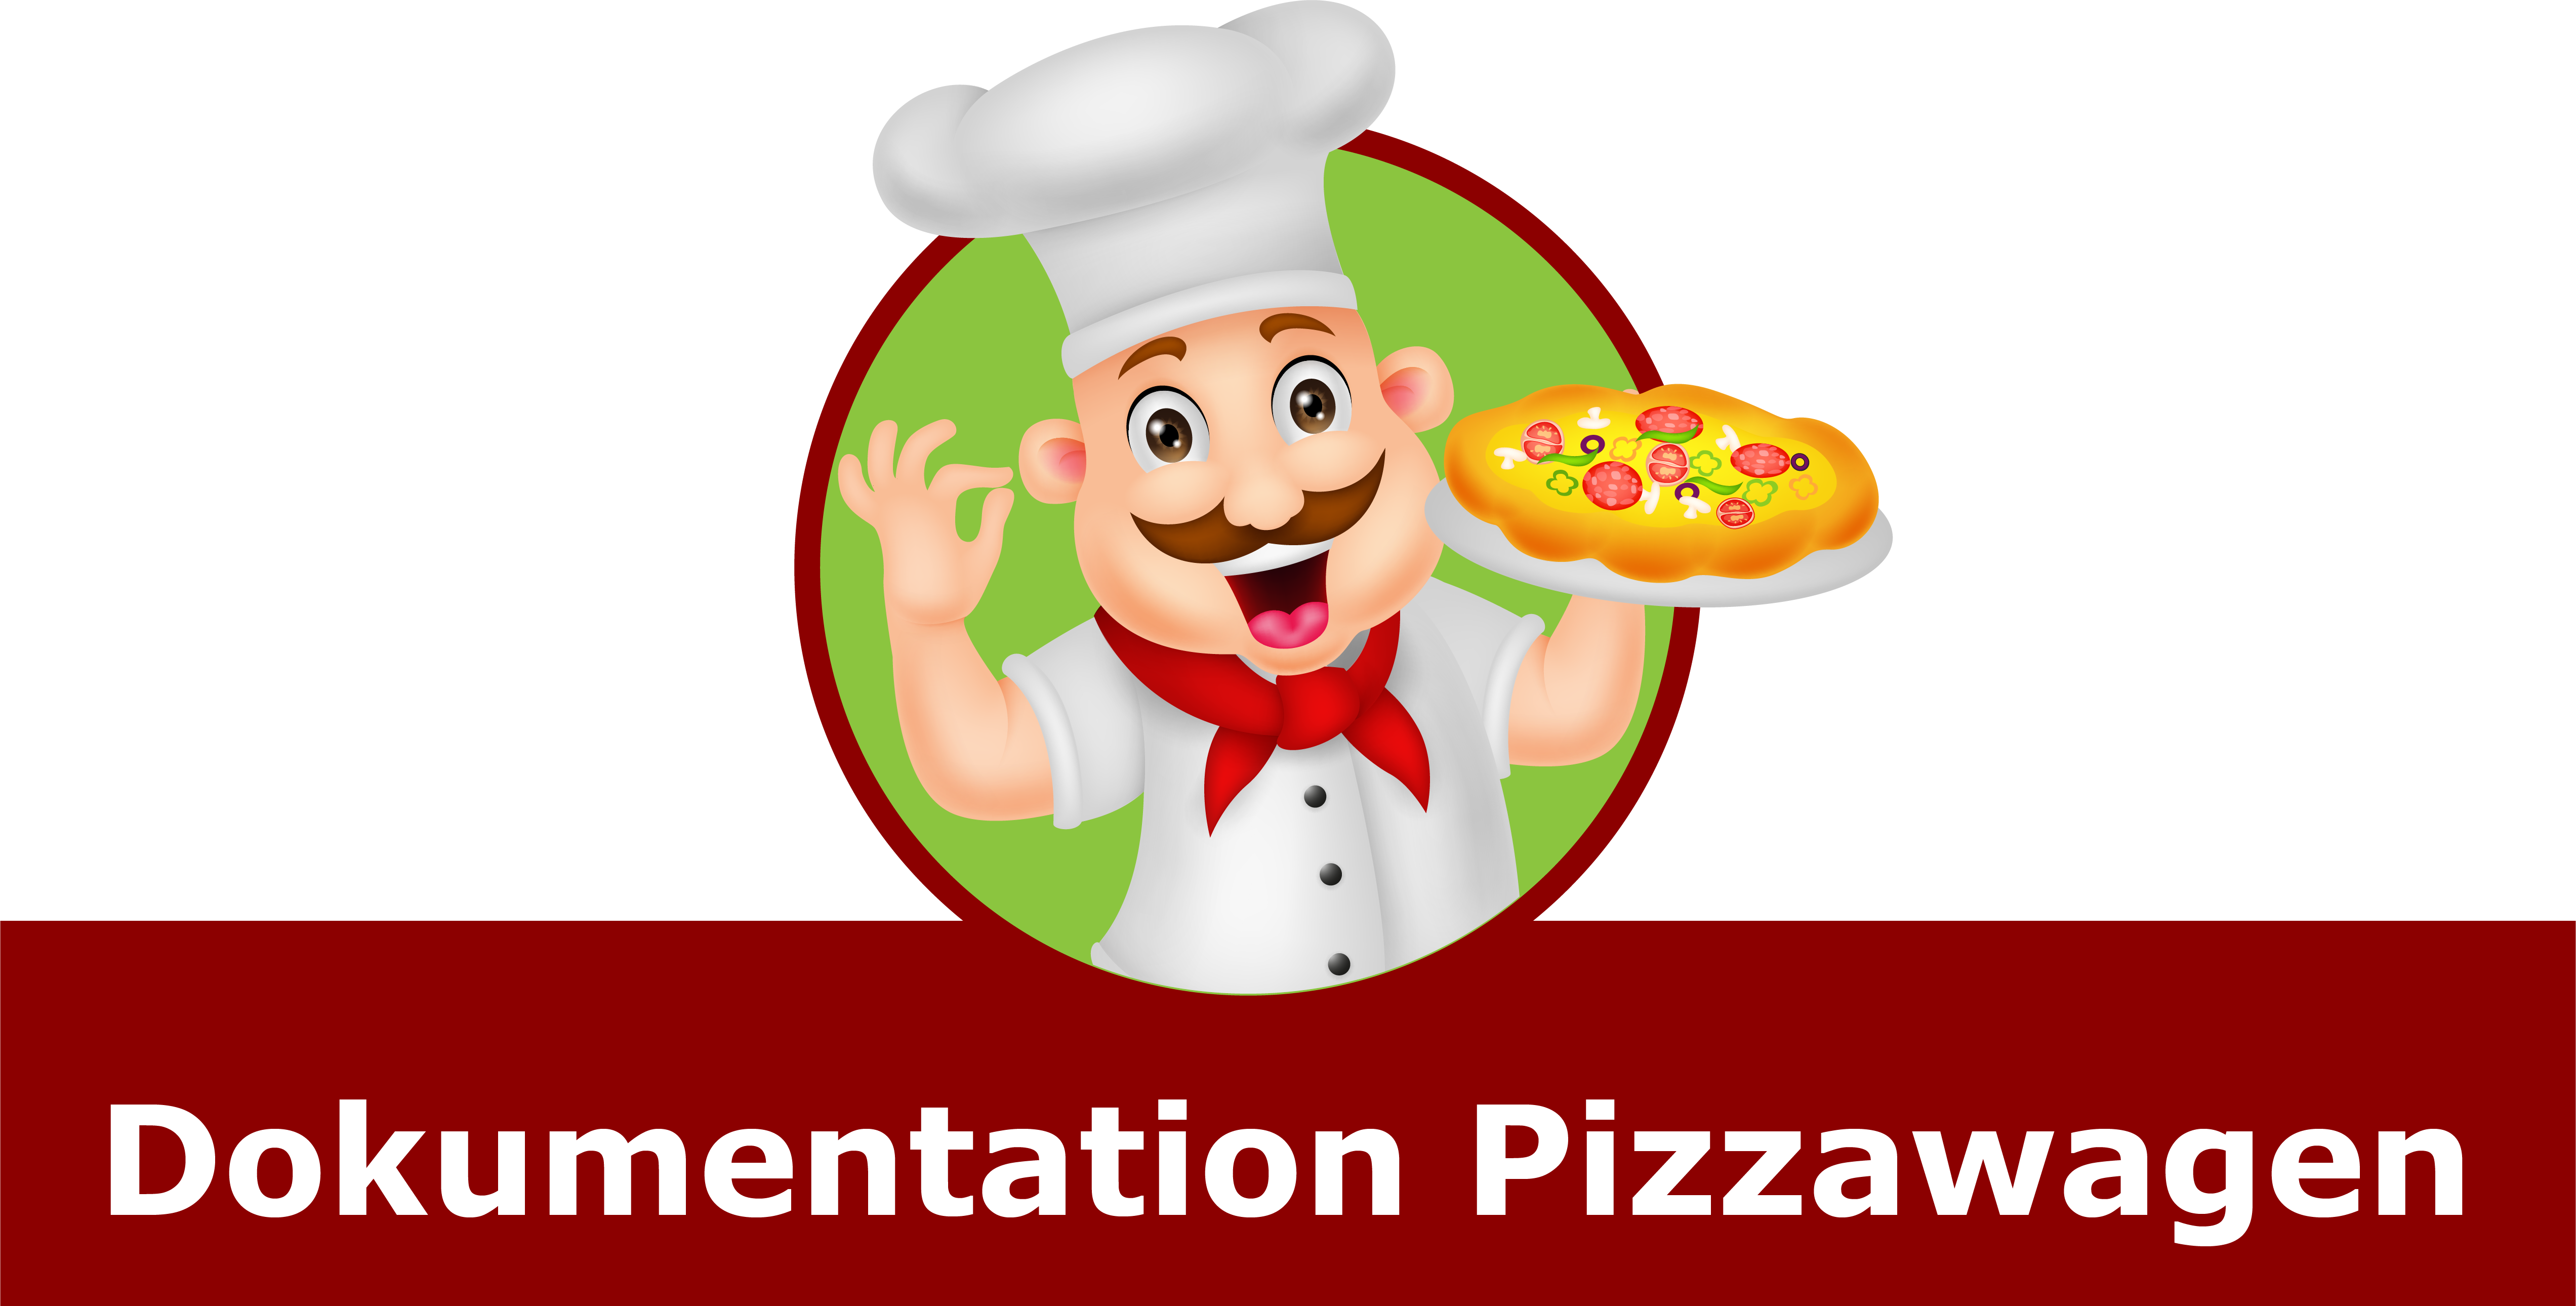 Titelbild Pizzawagen Dokumentation